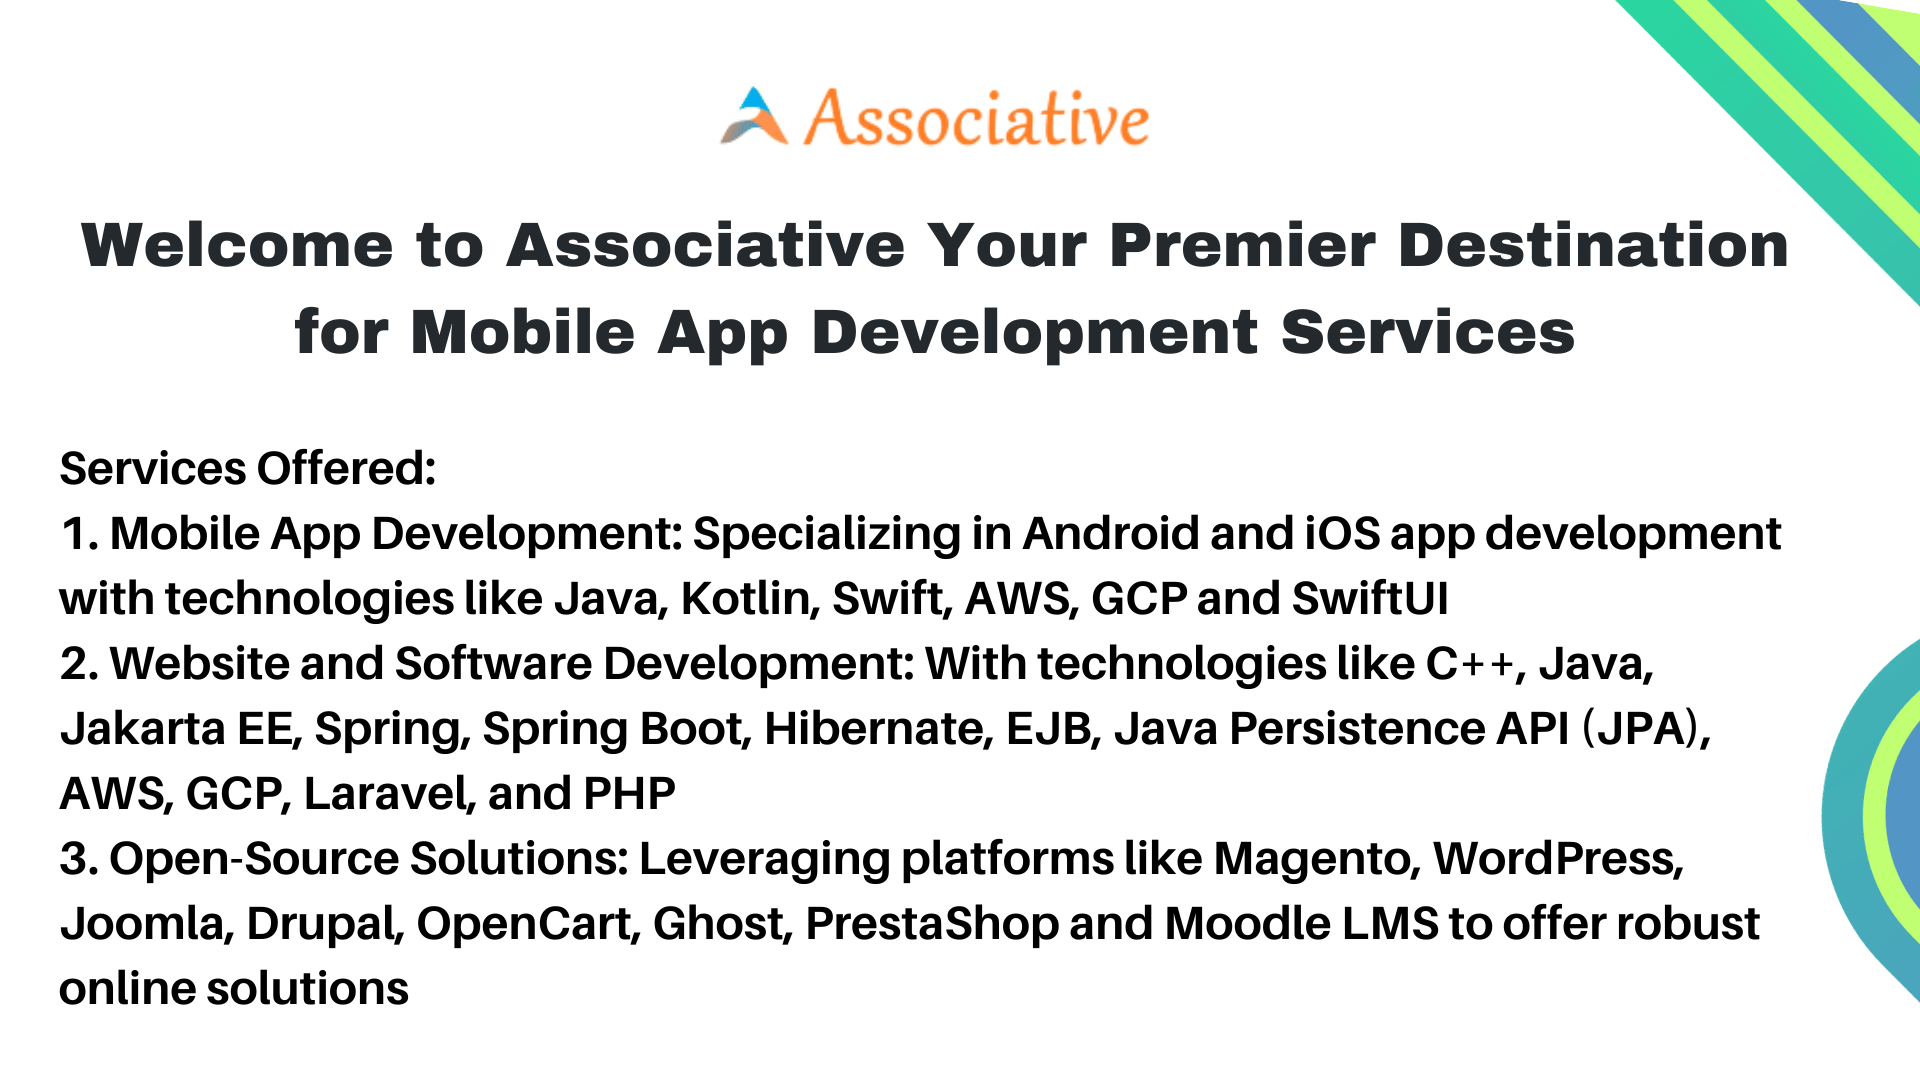 Welcome to Associative Your Premier Destination for Mobile App Development Services